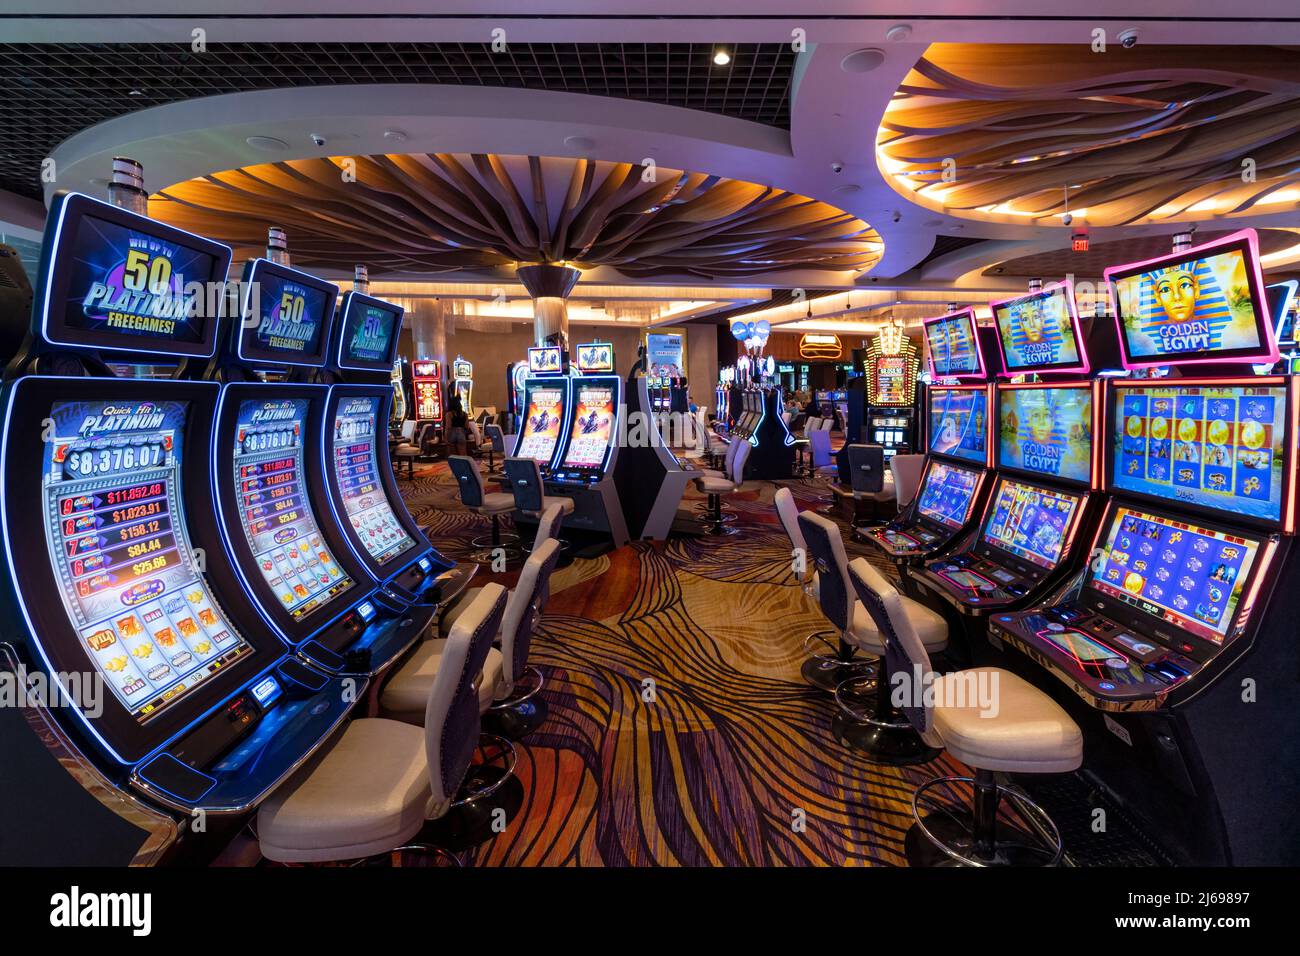 Gambling Slot Machines at the SLS Casino, SLS Hotel, Las Vegas, Nevada, United States of America Stock Photo